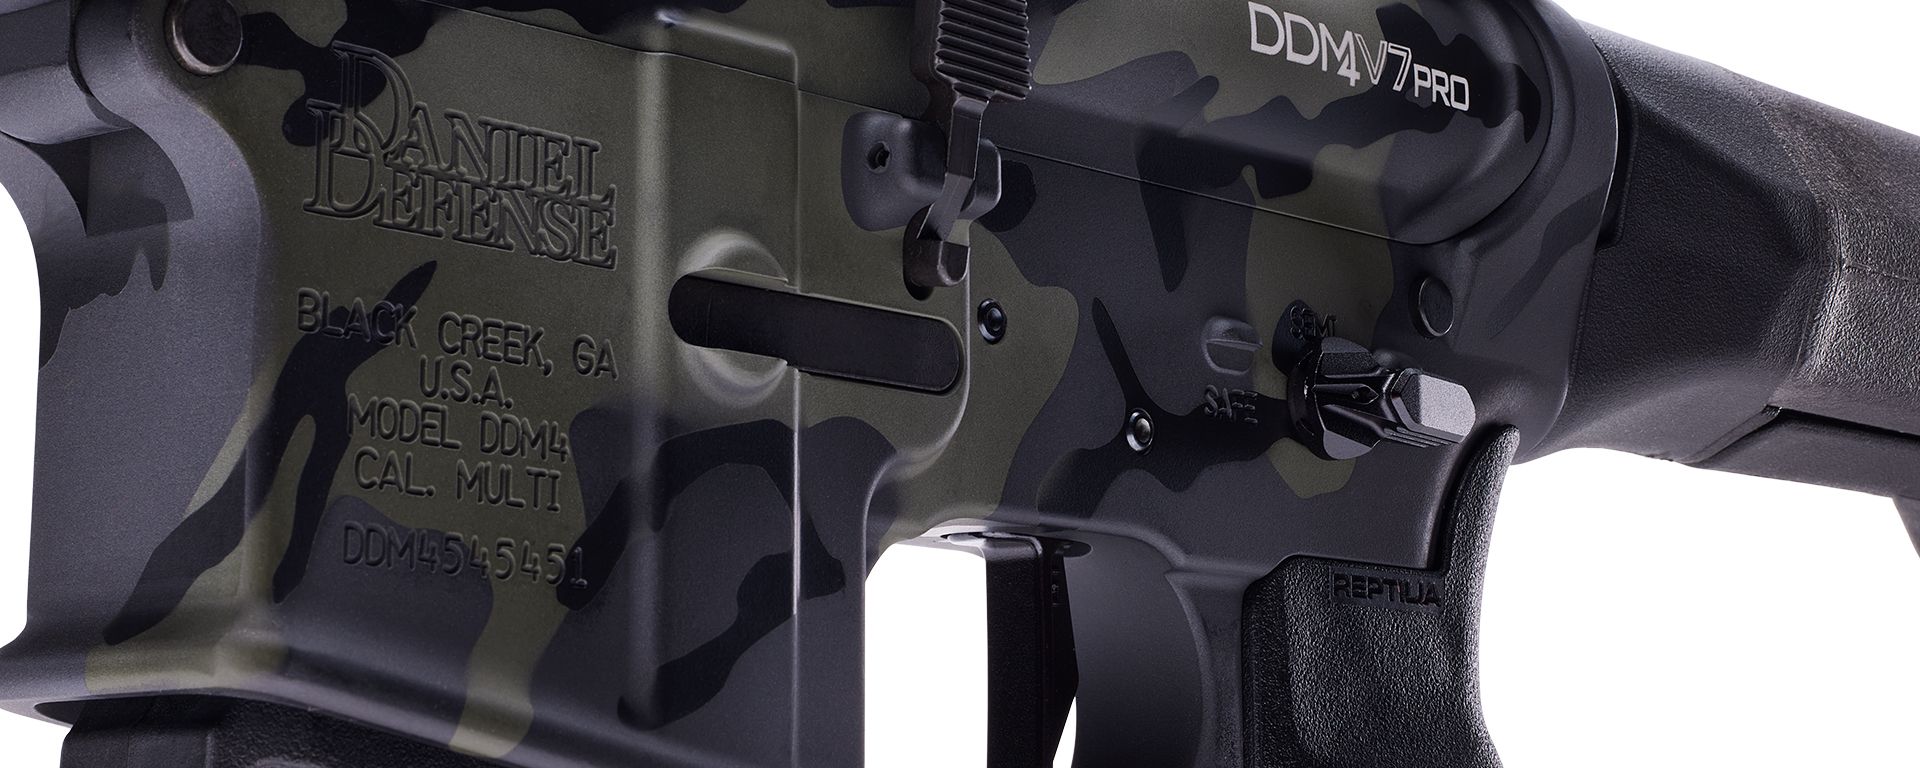 Daniel Defense DDM4 V7 PRO 18” - Dark Aces Limited Edition